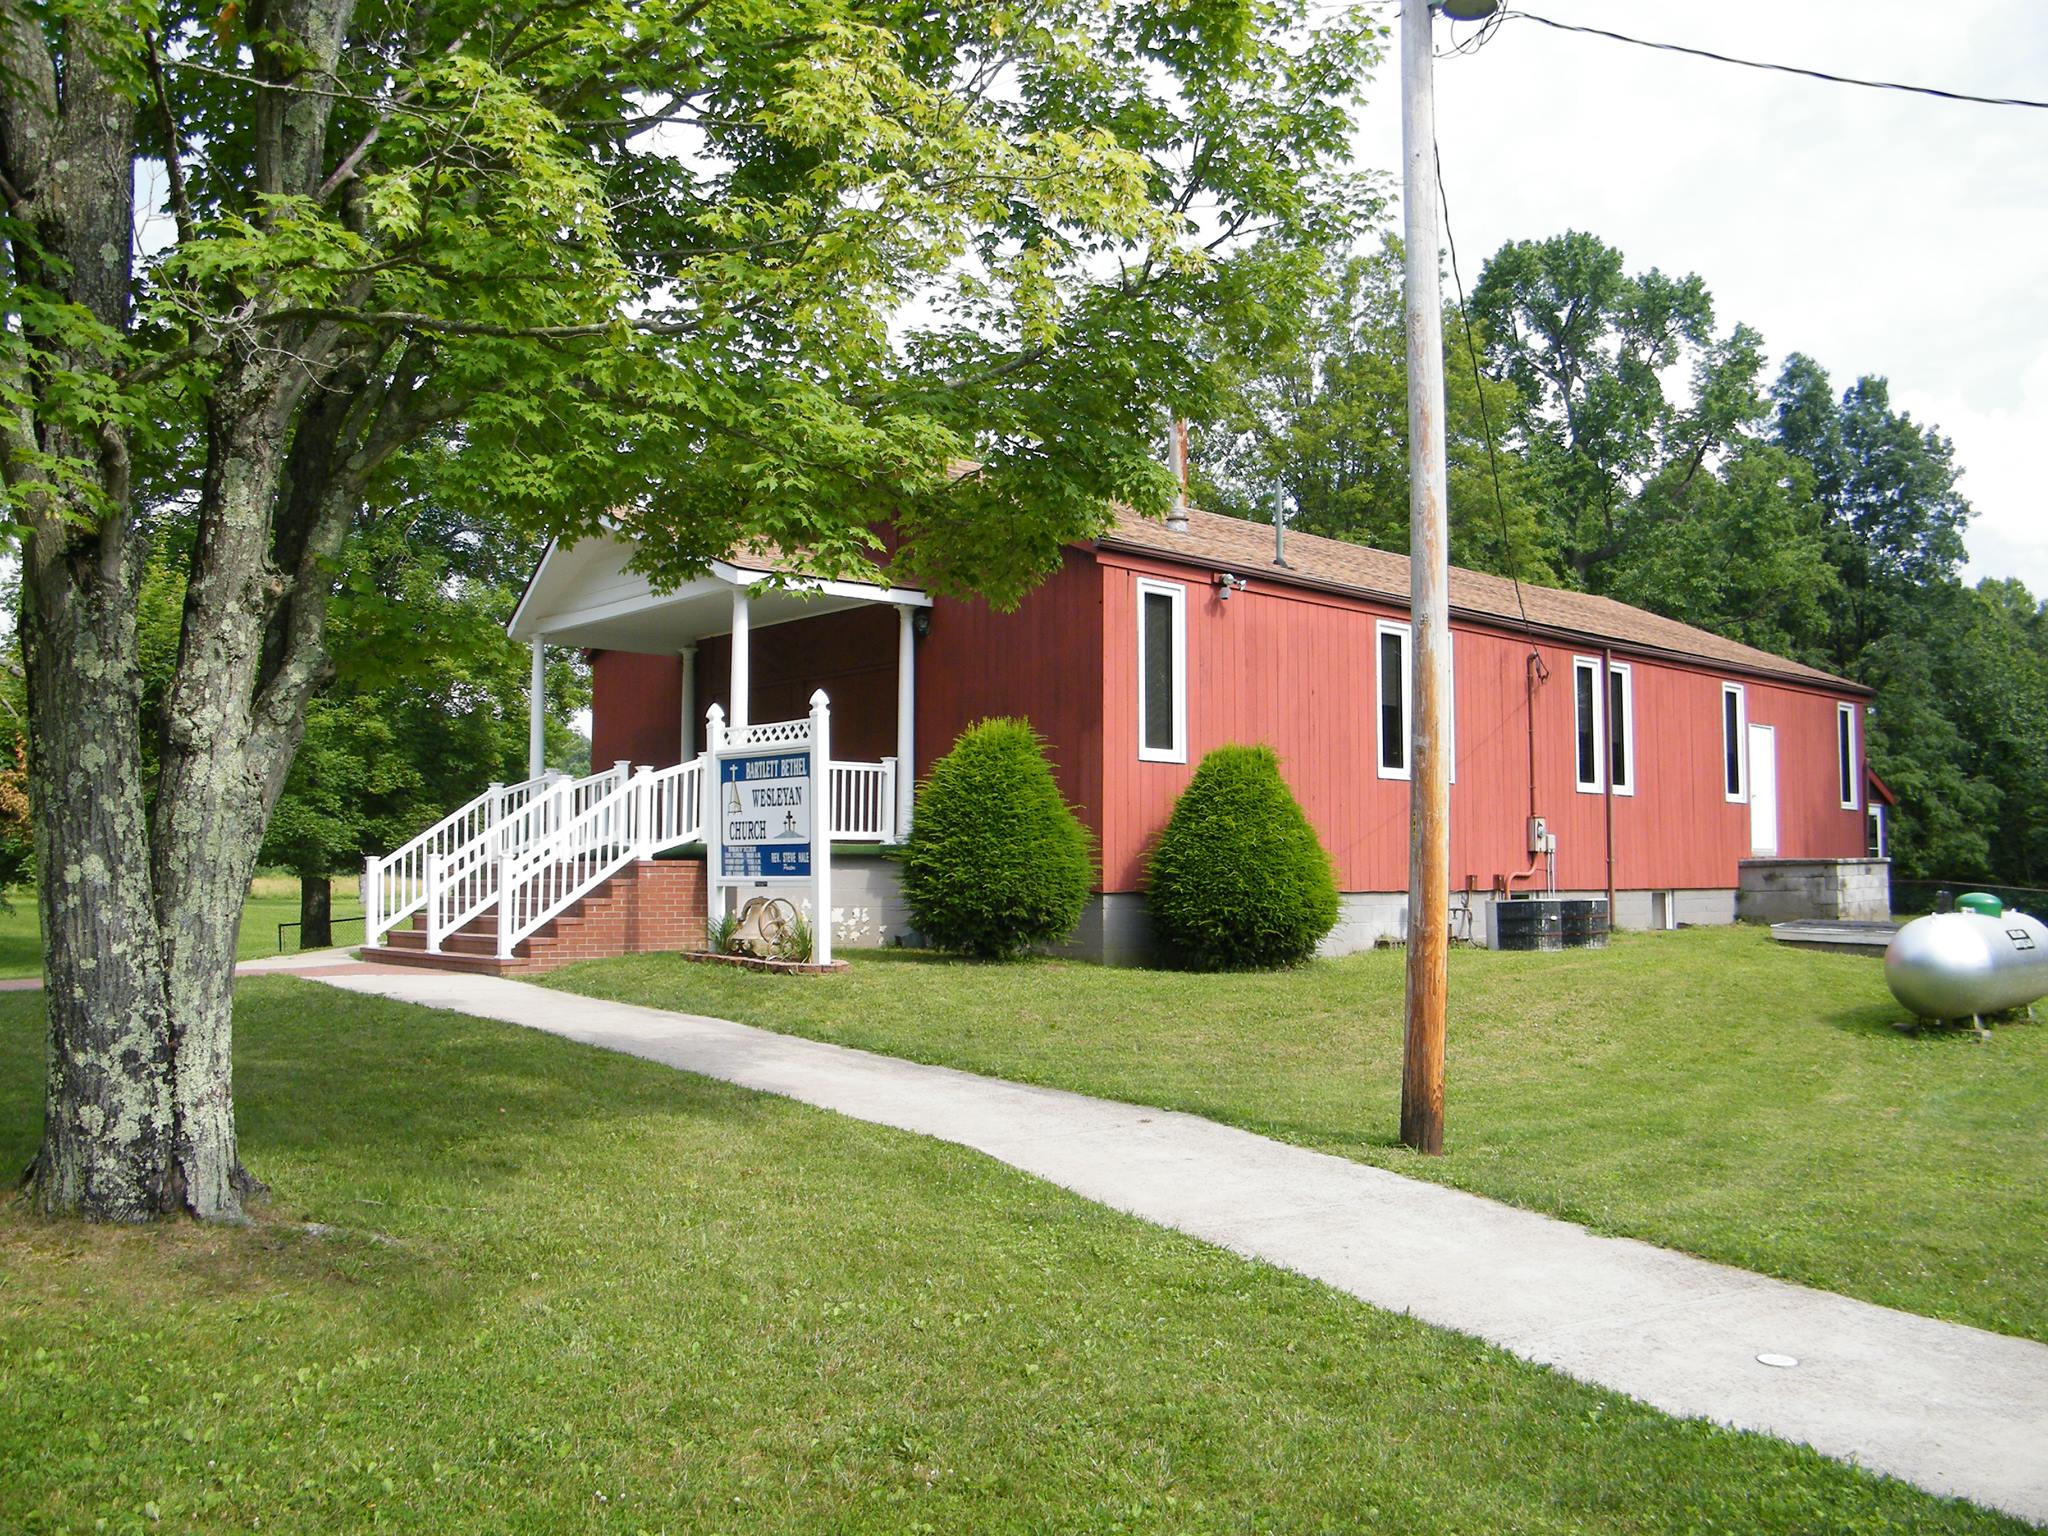 Bethel Wesleyan Church